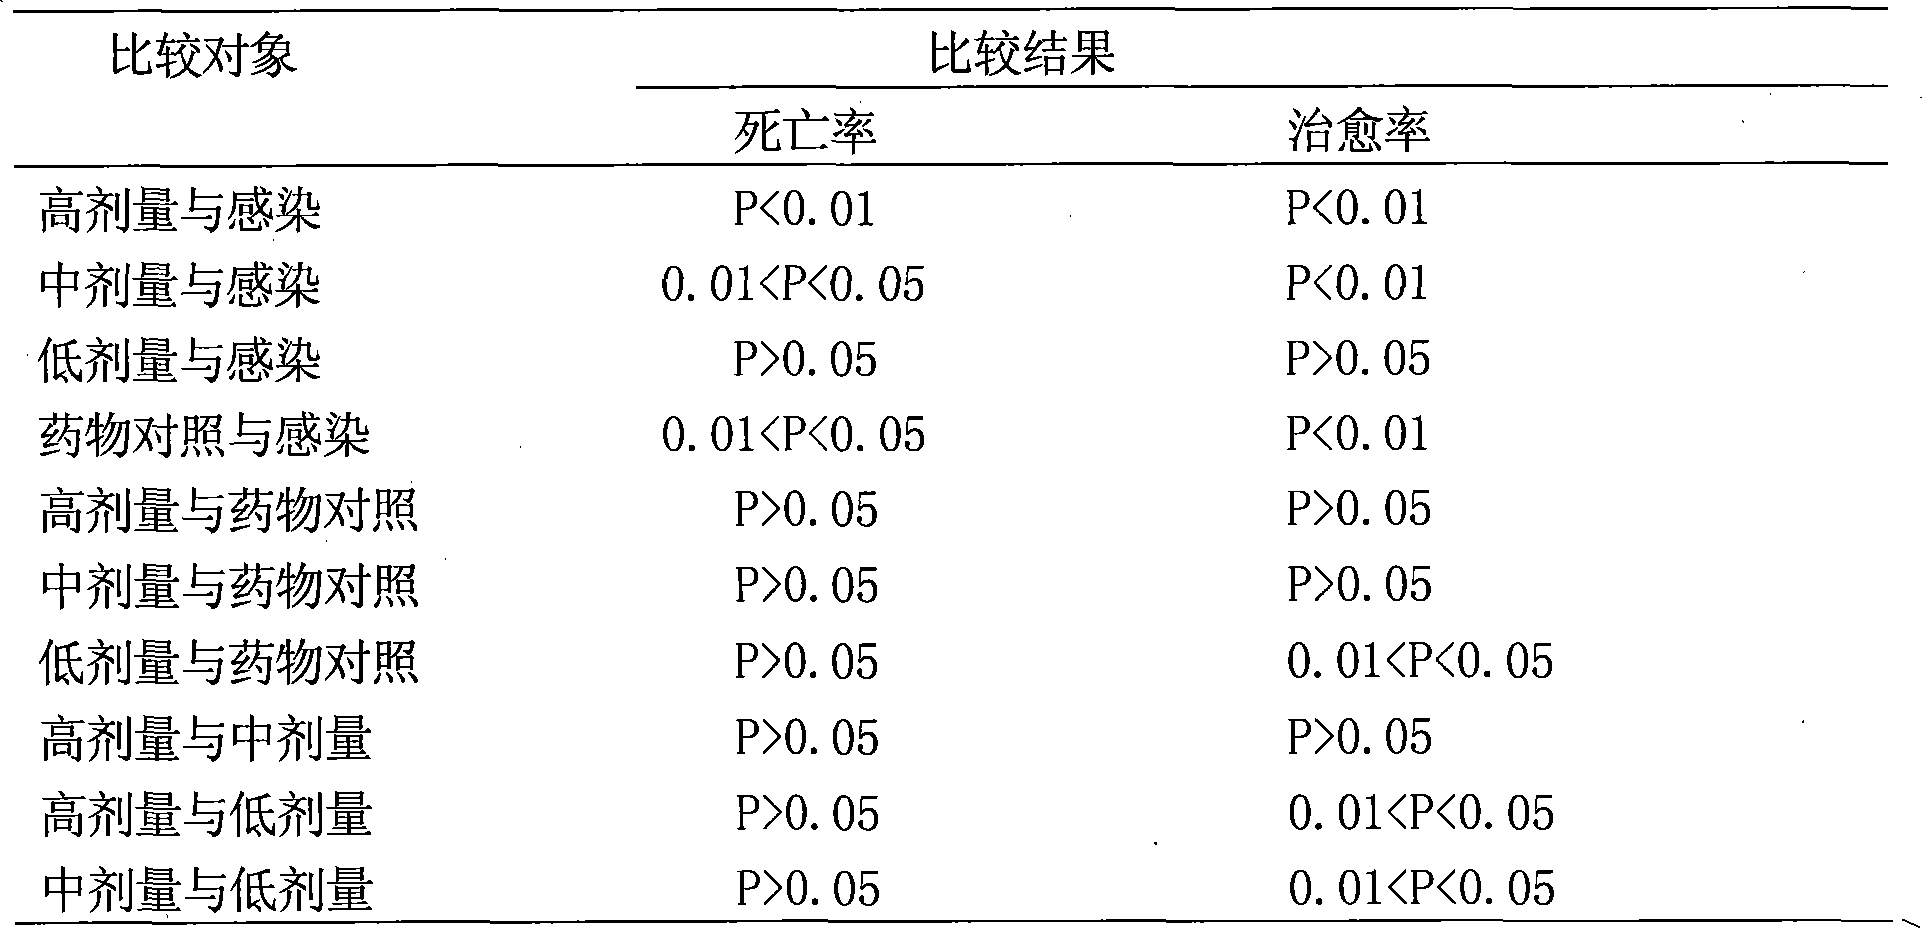 Preparation method of Maxingshigan submicron powder